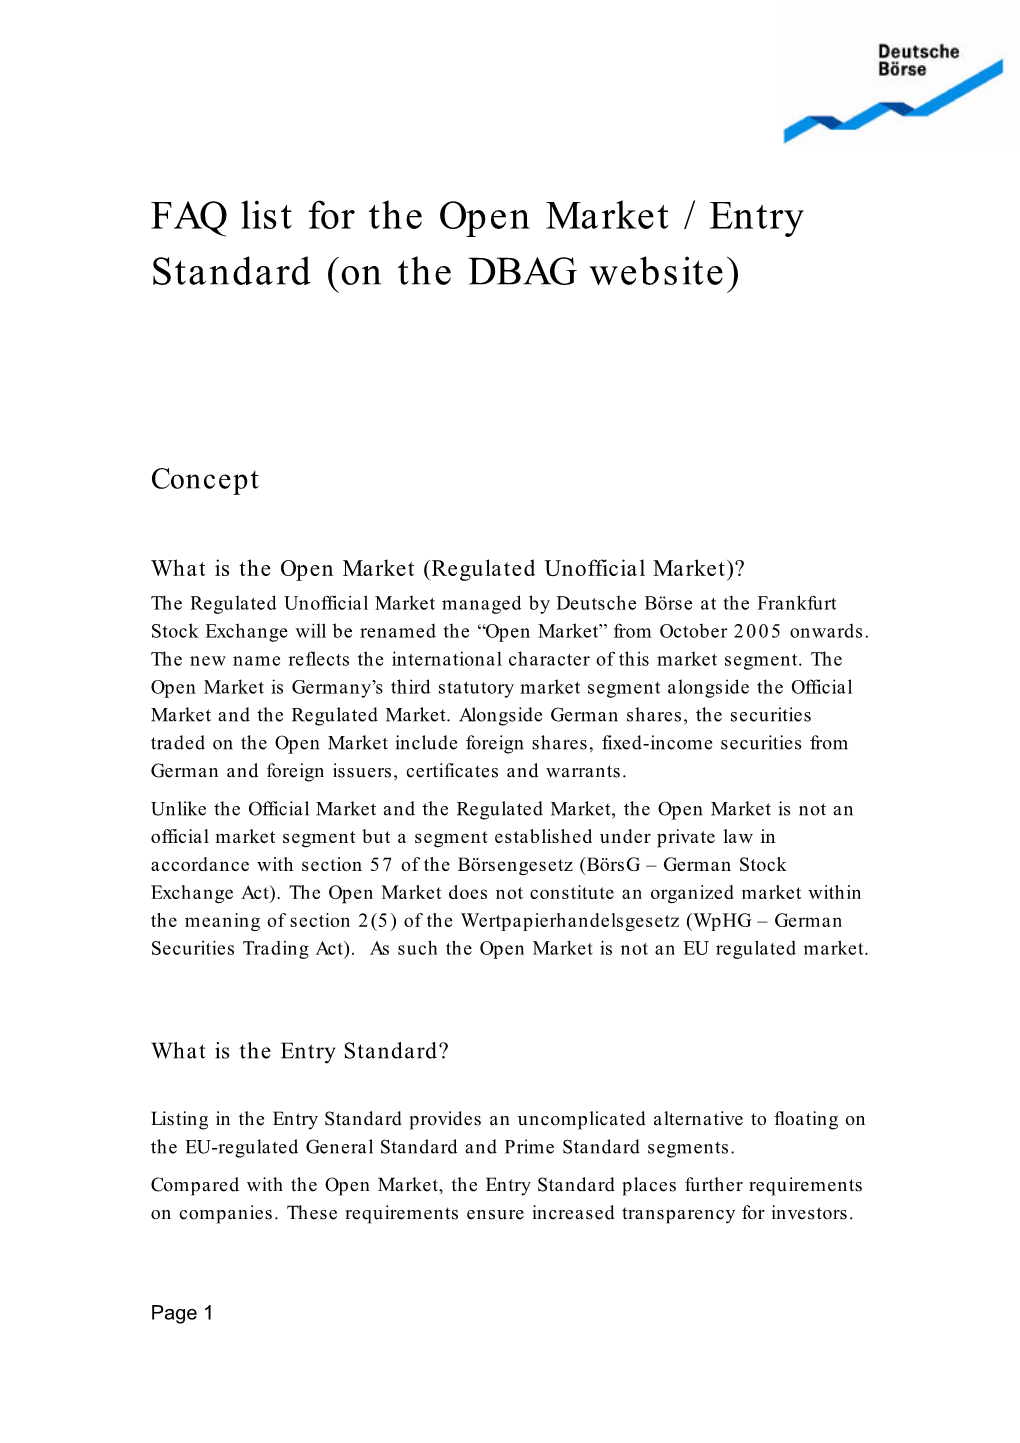 FAQ List for the Open Market / Entry Standard (On the DBAG Website)